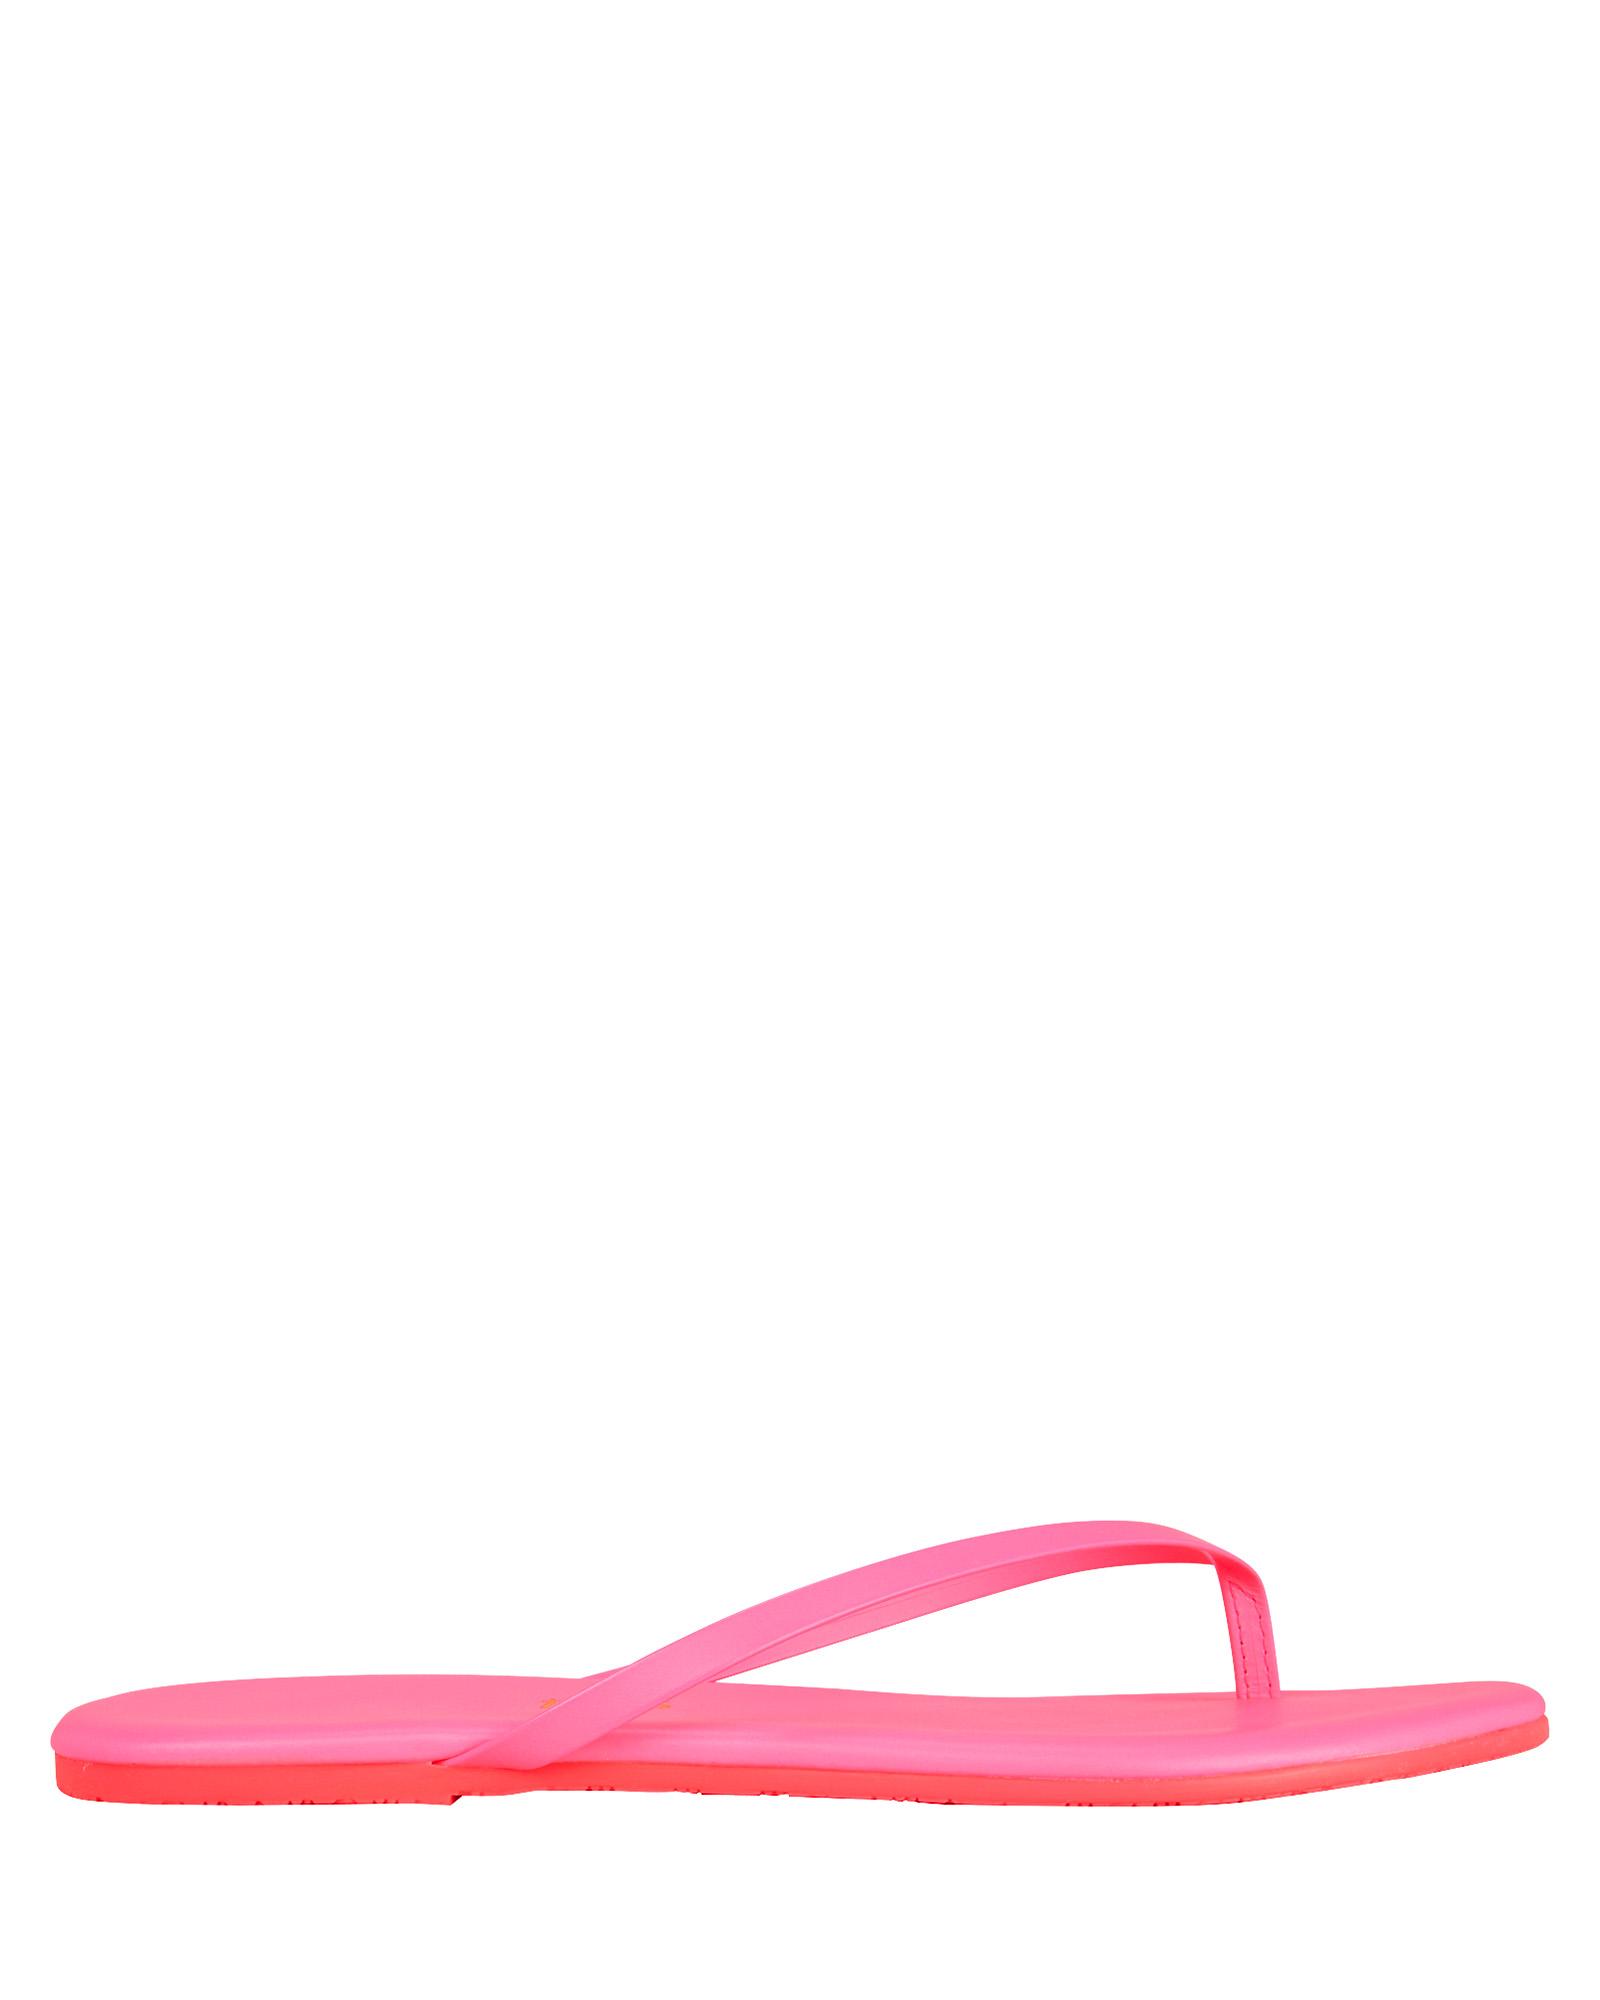 TKEES Neon Lily Flip Flops in Pink | Lyst